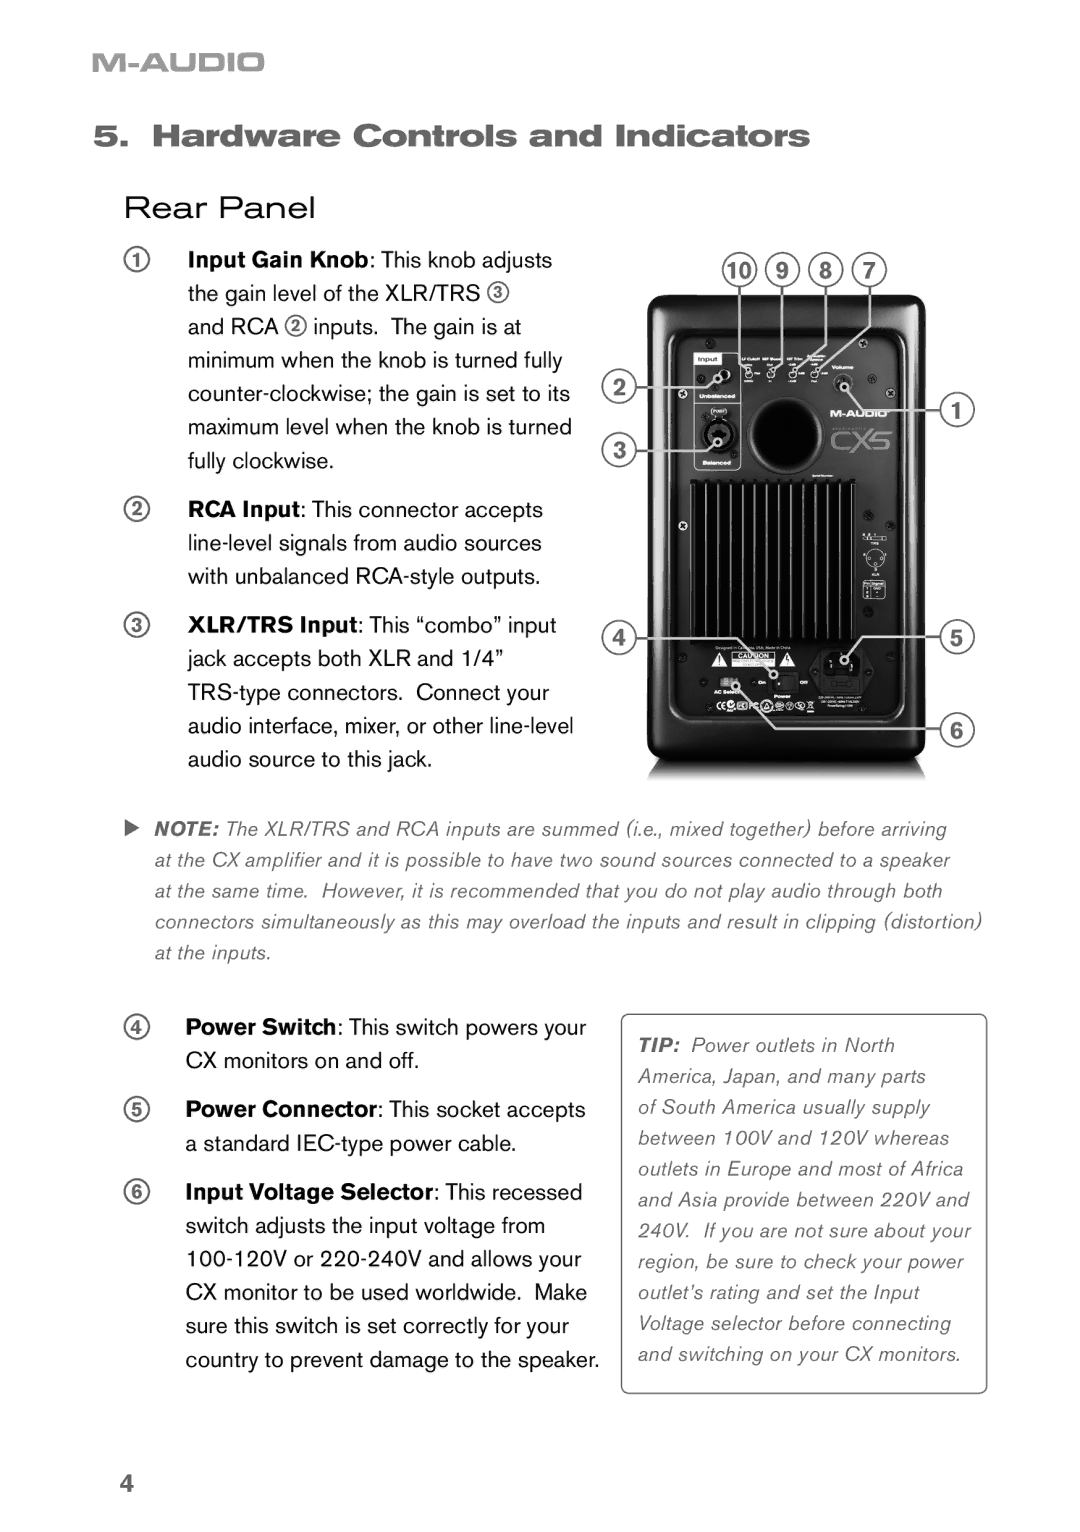 M-Audio CX5 manual Hardware Controls and Indicators, Rear Panel 